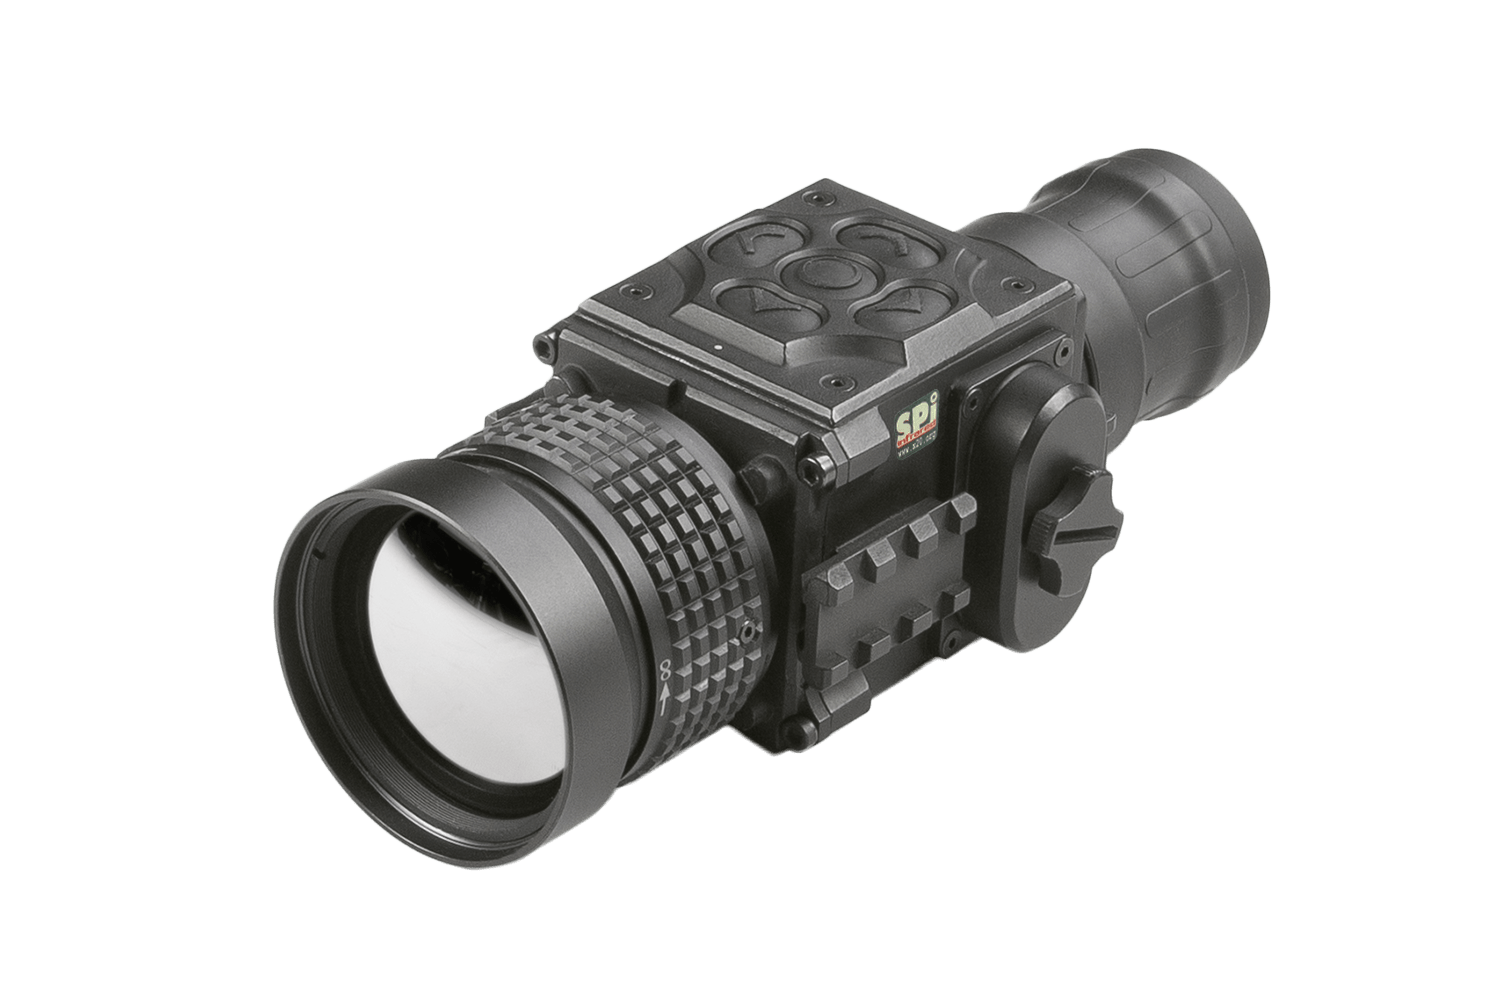 SPI spartan thermal clip-on scope